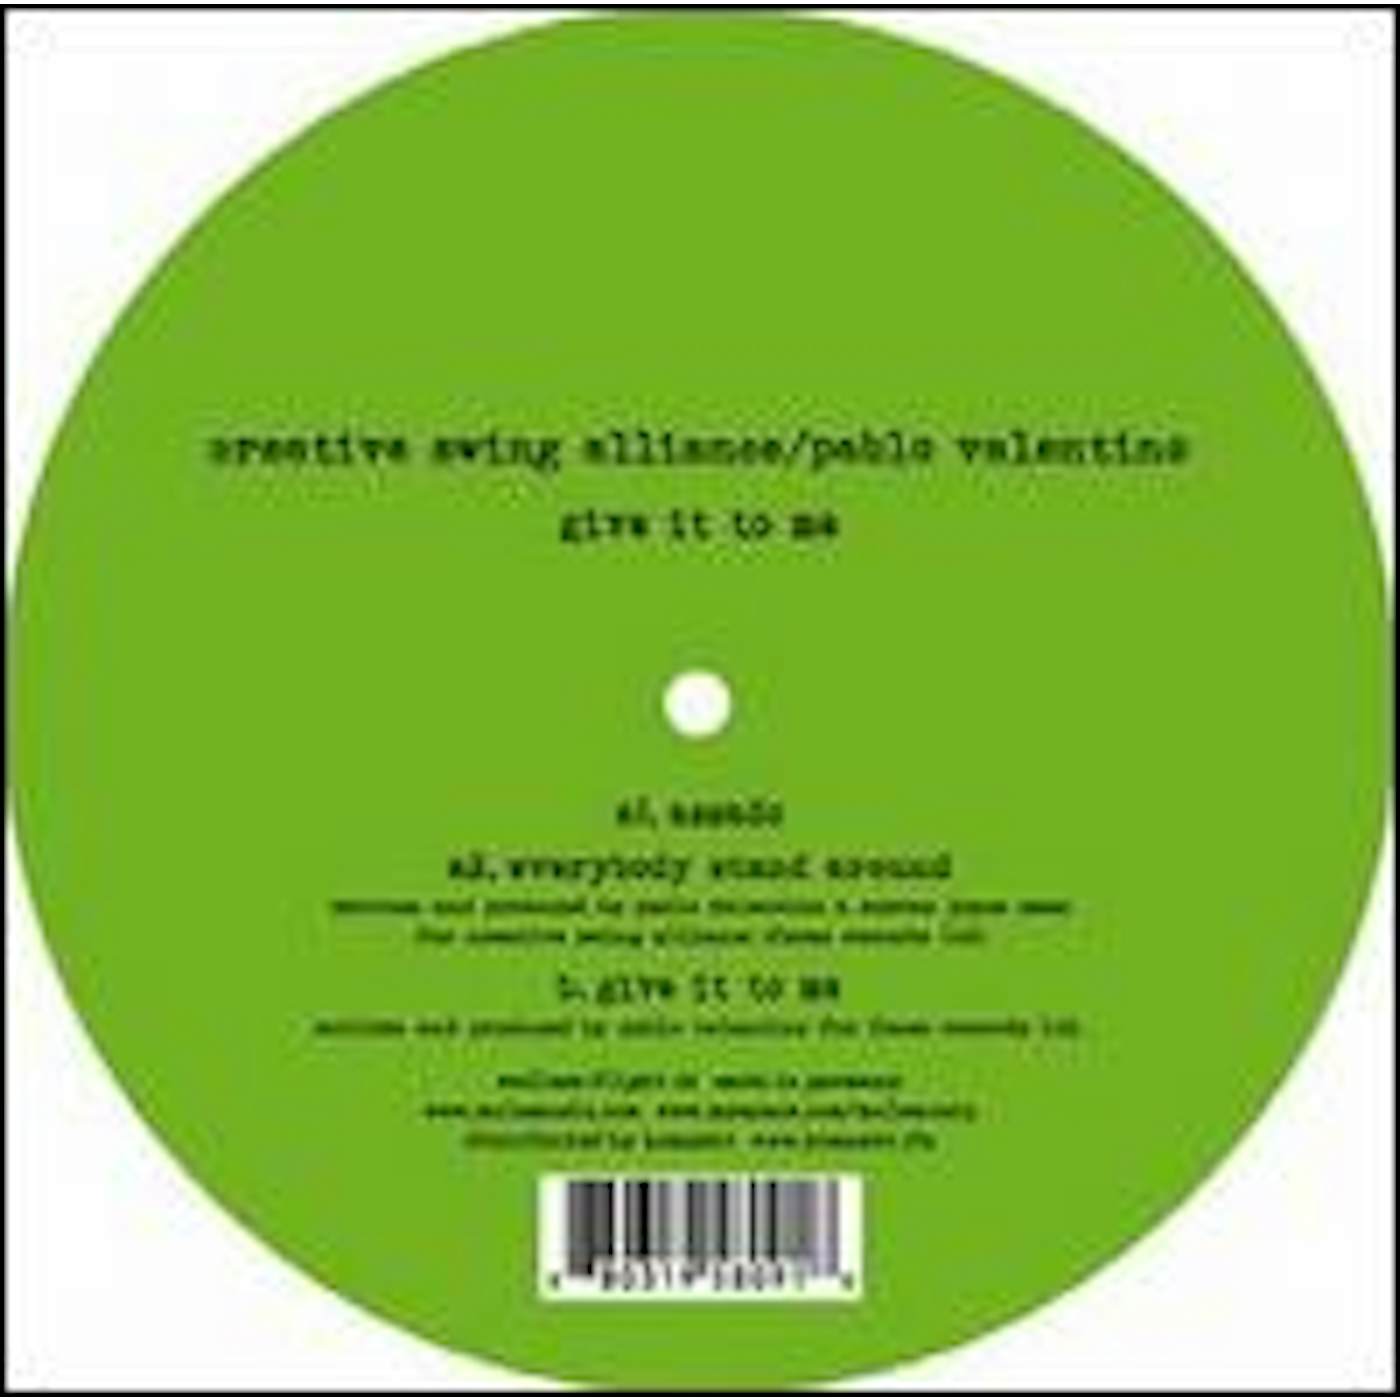 Pablo Creative Swing Alliance / Valentino GIVE IT TO ME Vinyl Record